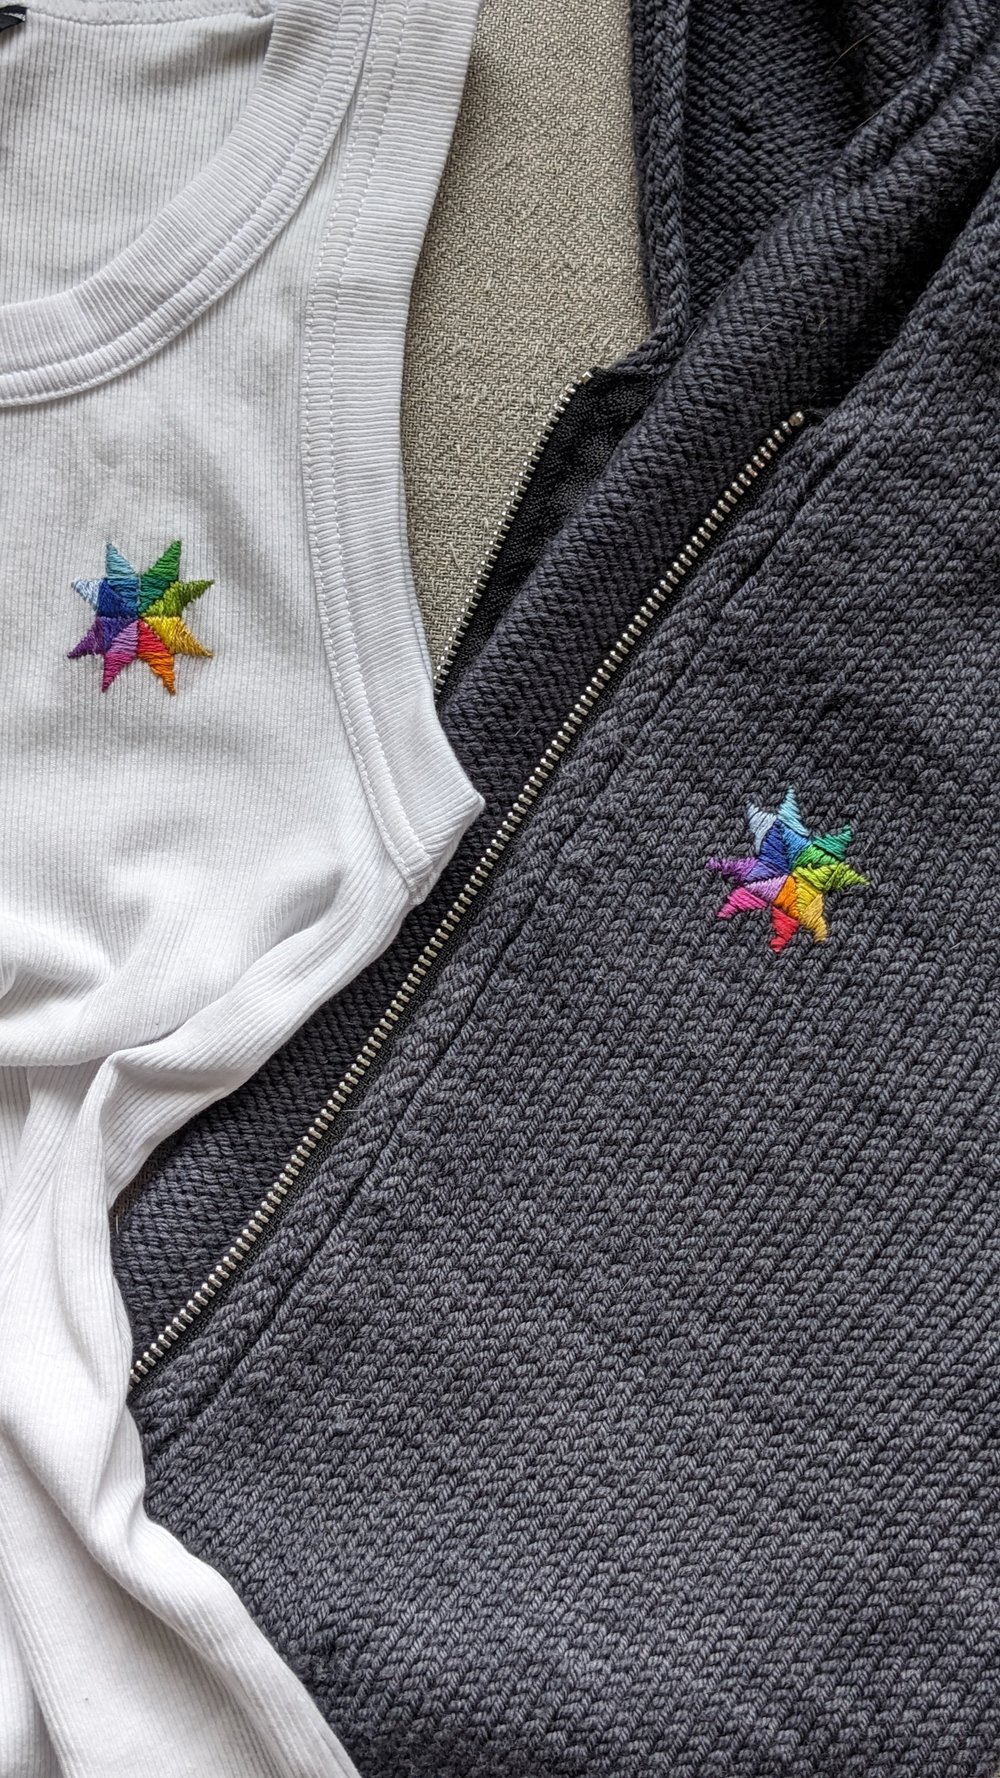 Stick & Stitch Embroidery Patters – EWE fine fiber goods